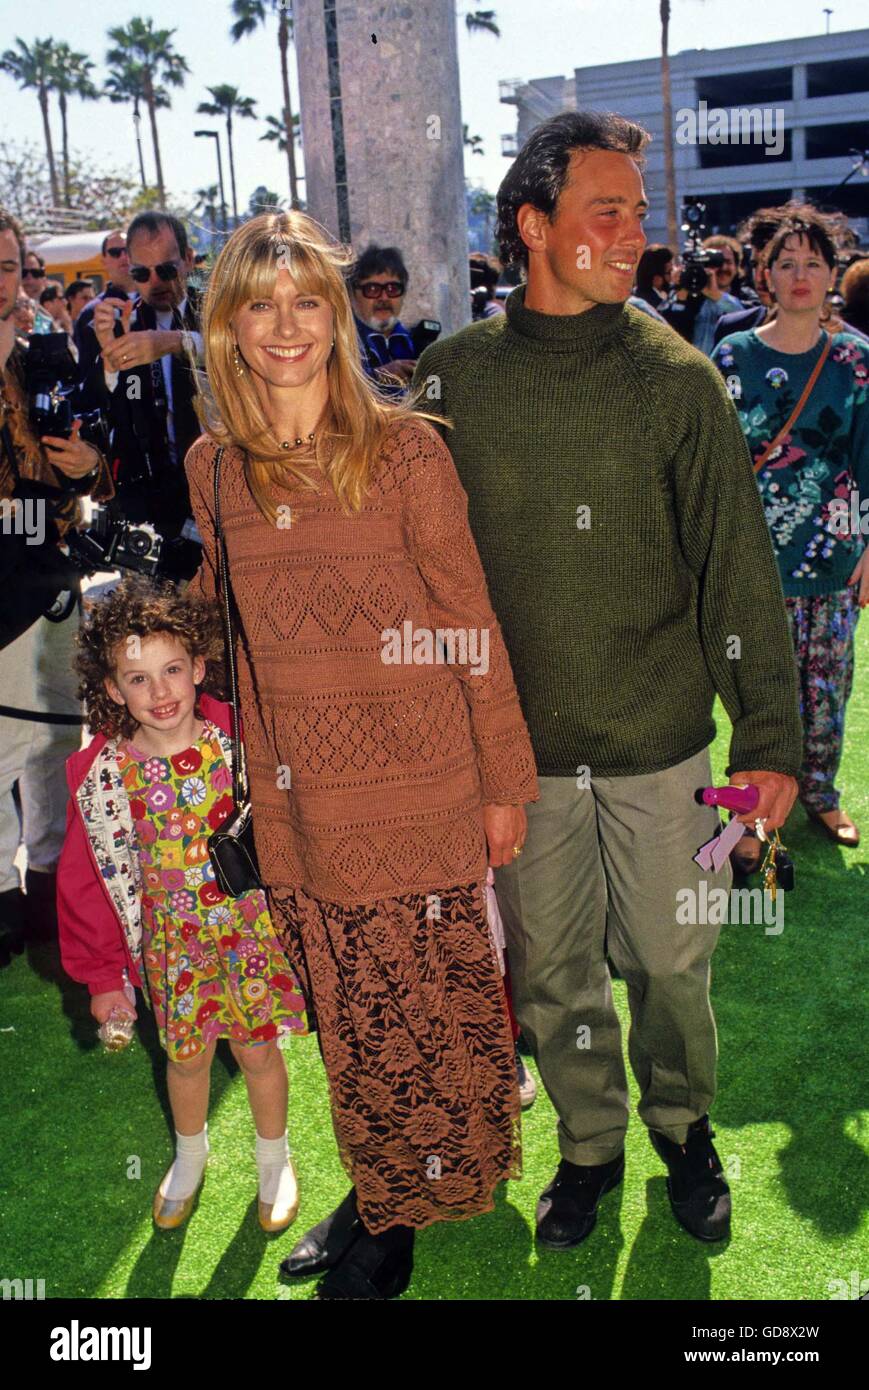 Olivia Newton John With Husband Matt Lattanzi And Daughter Chloe. 28th Mar, 2008. 1991 © Roger Karnbad/ZUMA Wire/Alamy Live News Stock Photo